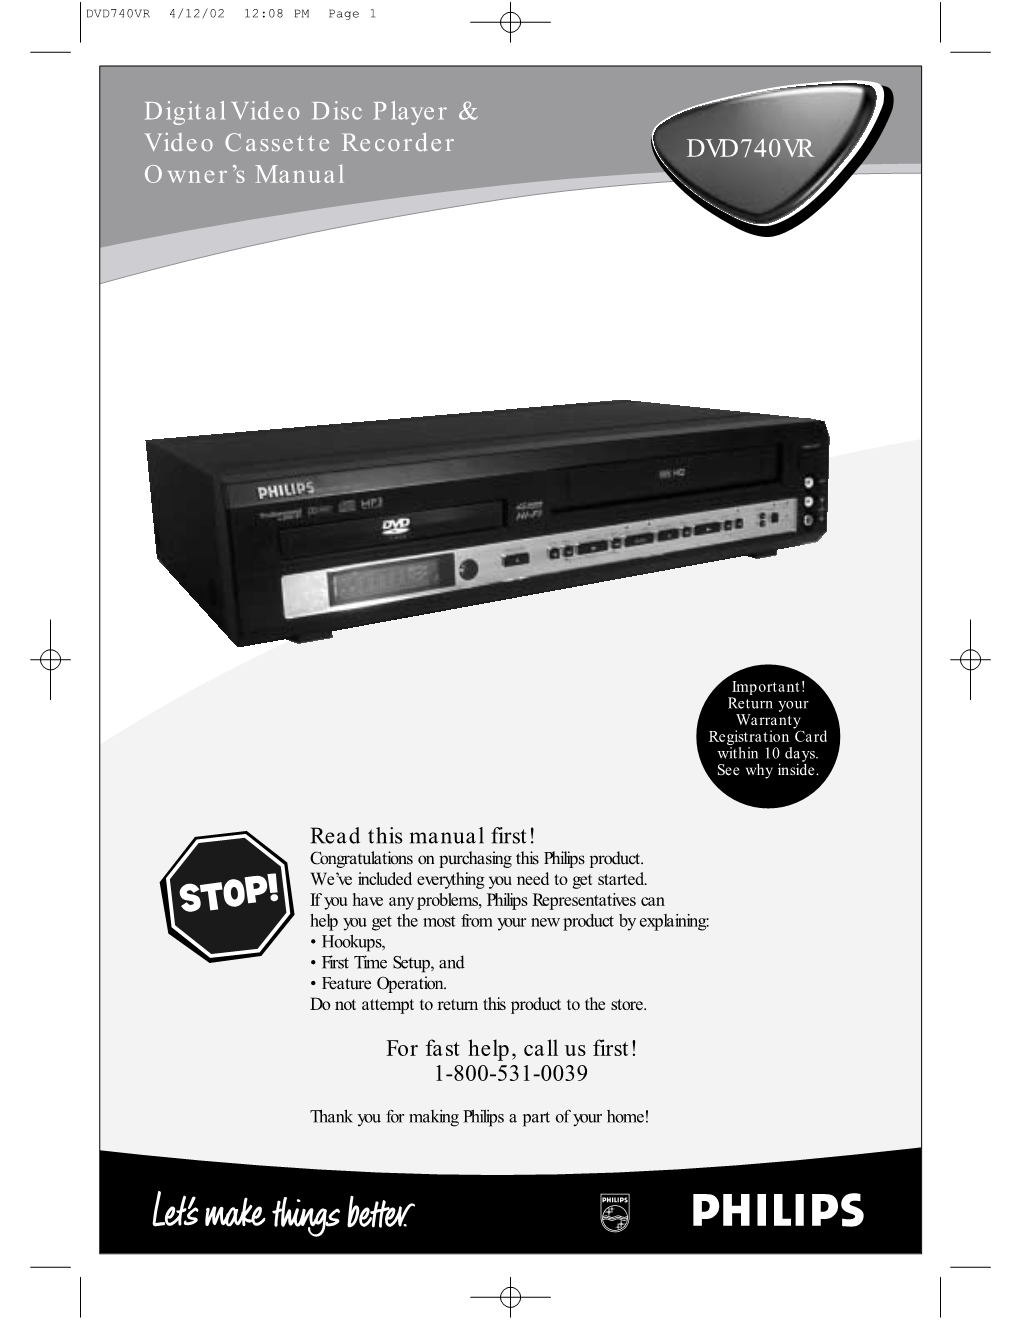 DVD740VR Digital Video Disc Player & Video Cassette Recorder Owner's